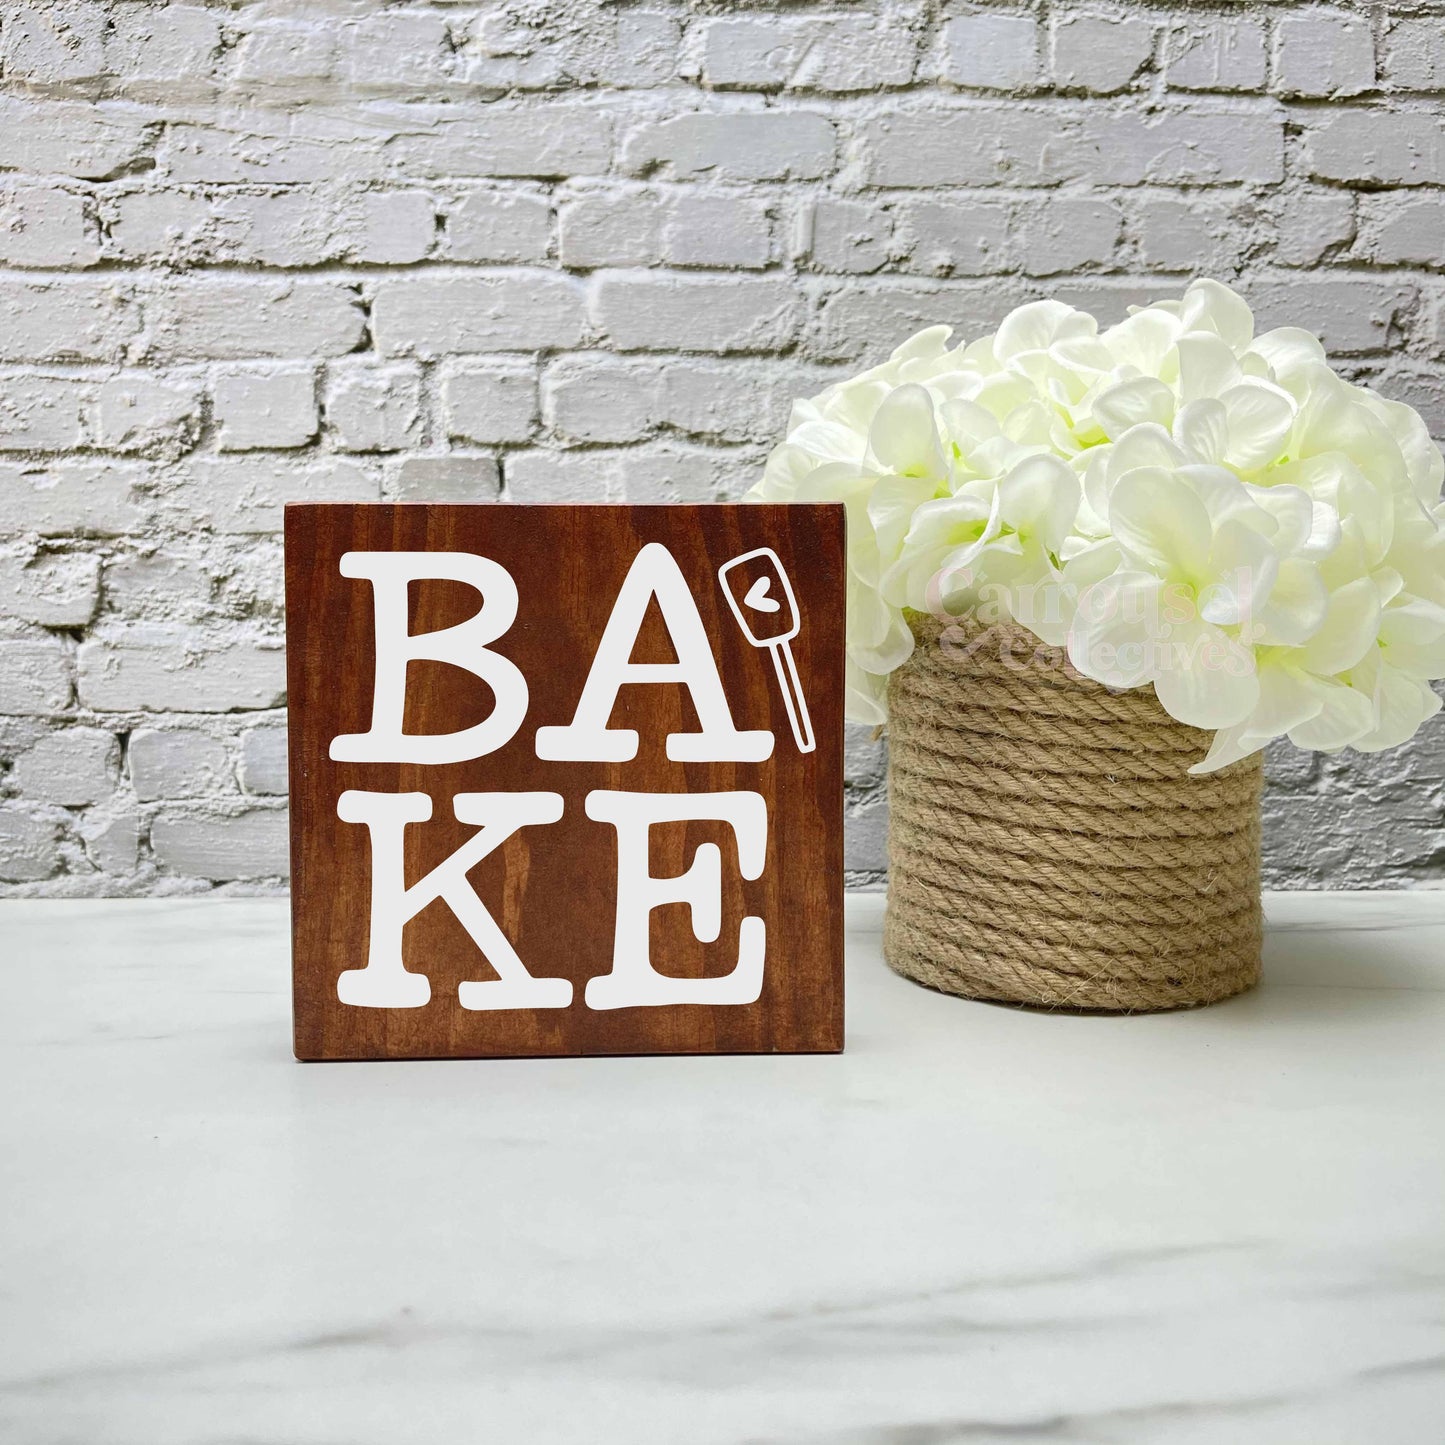 Bake, kitchen wood sign, kitchen decor, home decor